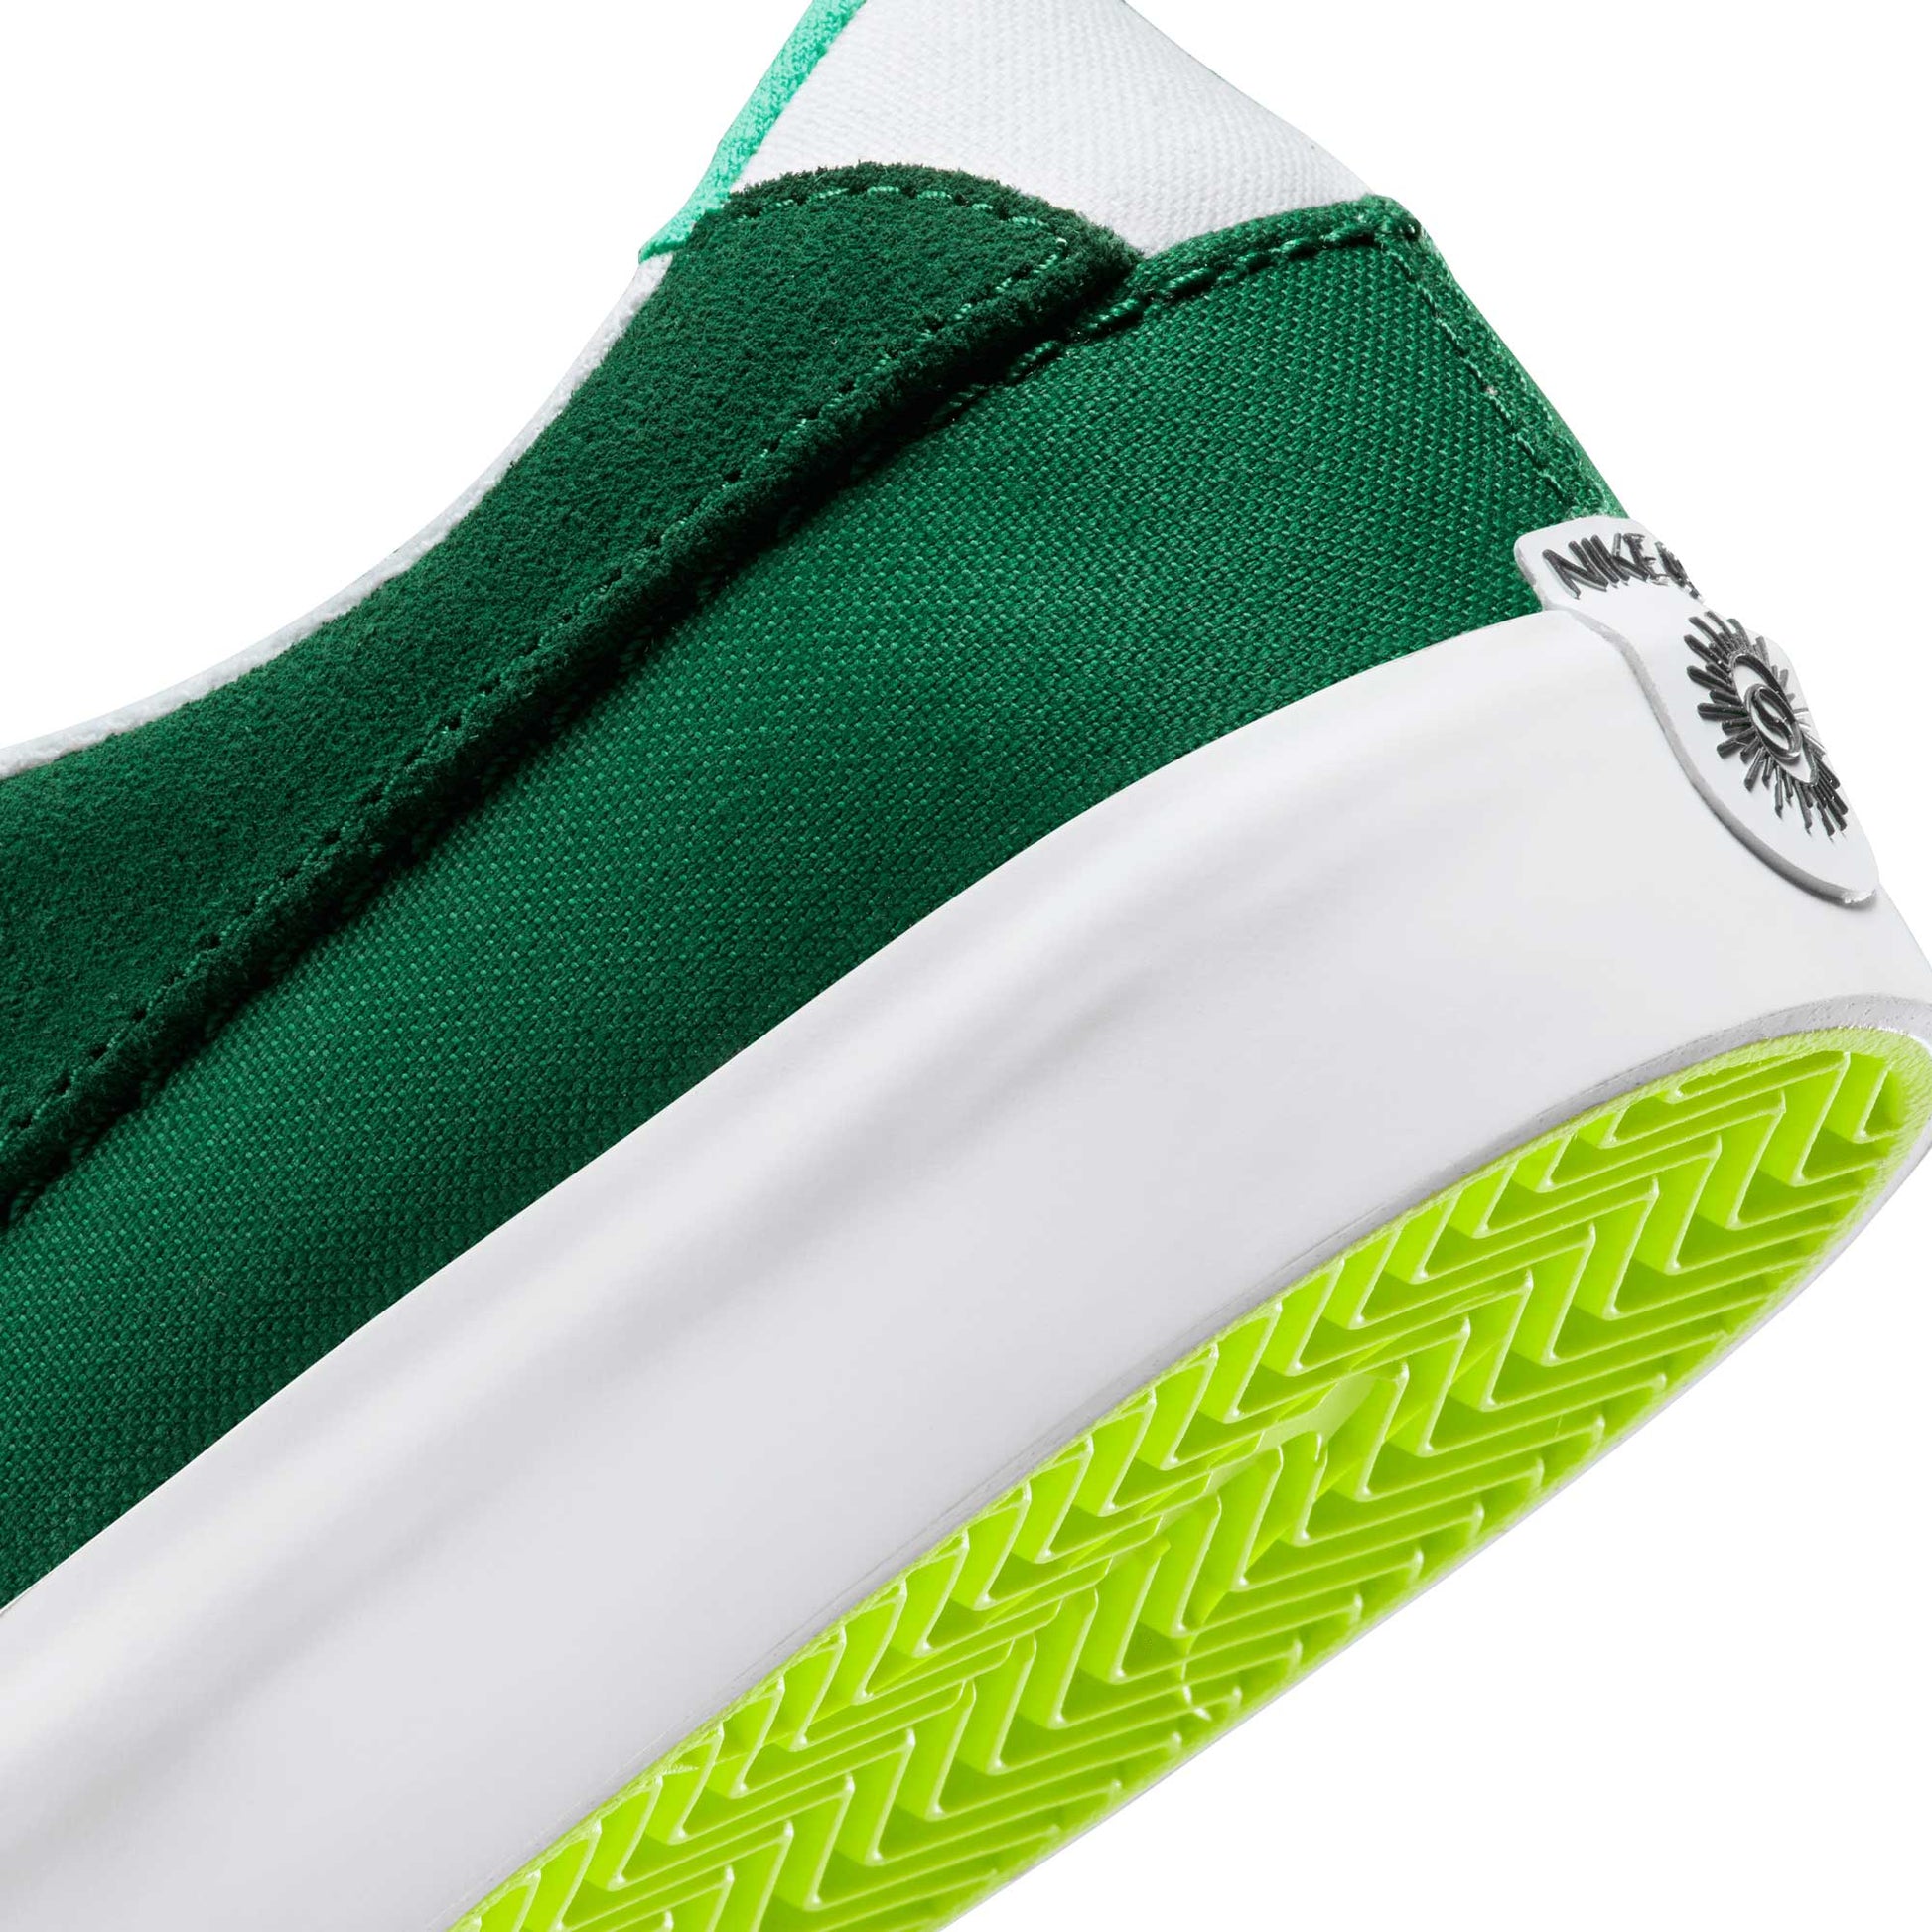 Nike SB Shane, gorge green/light menta-gorge green - Tiki Room Skateboards - 3